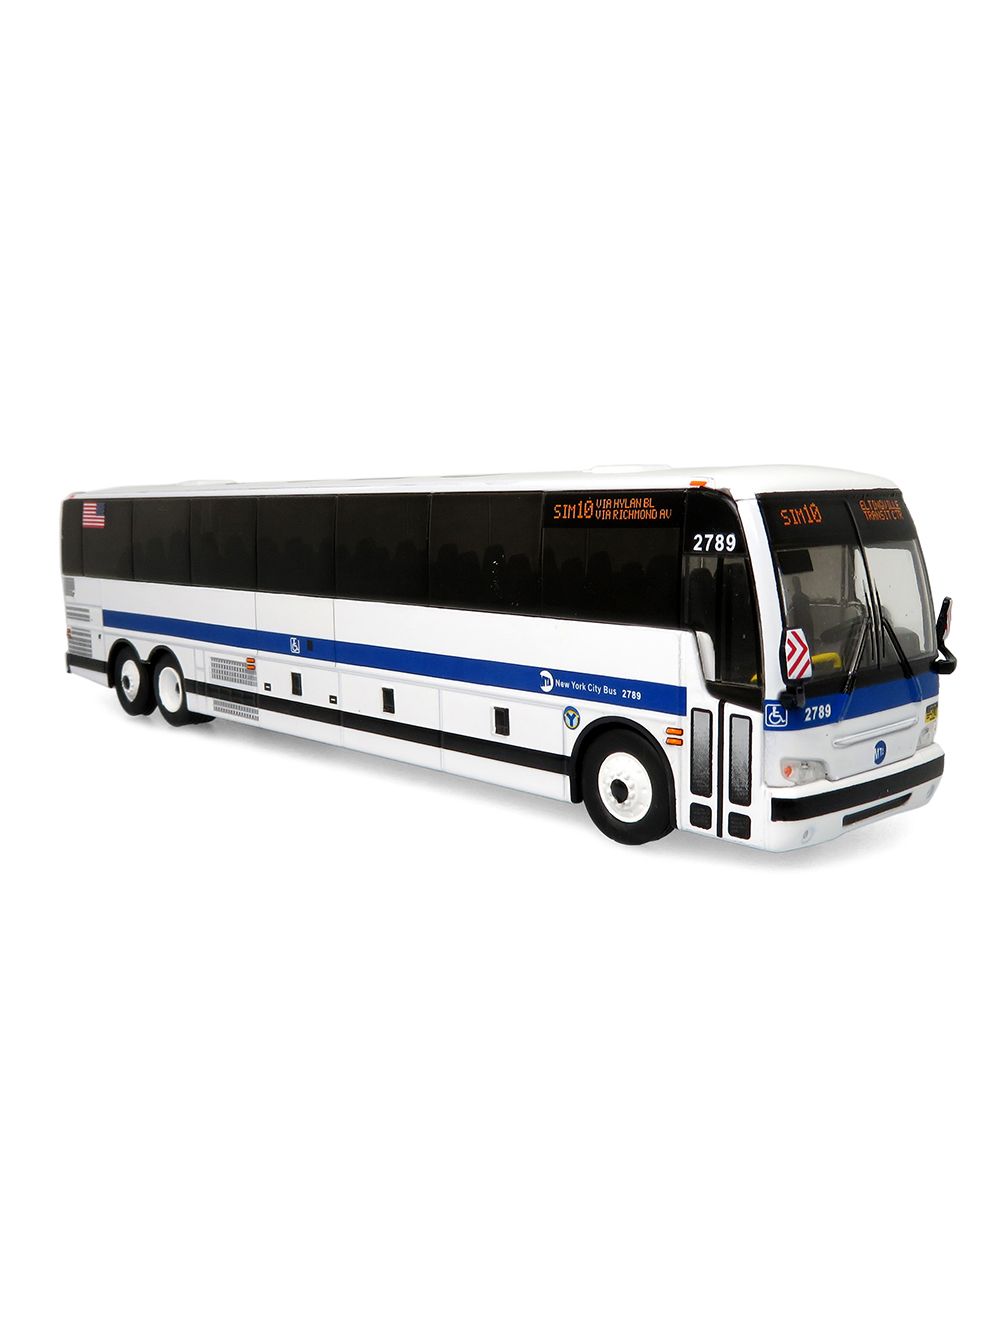 Prevost X3-45 Commuter Coach SIM10 Diecast Model Bus